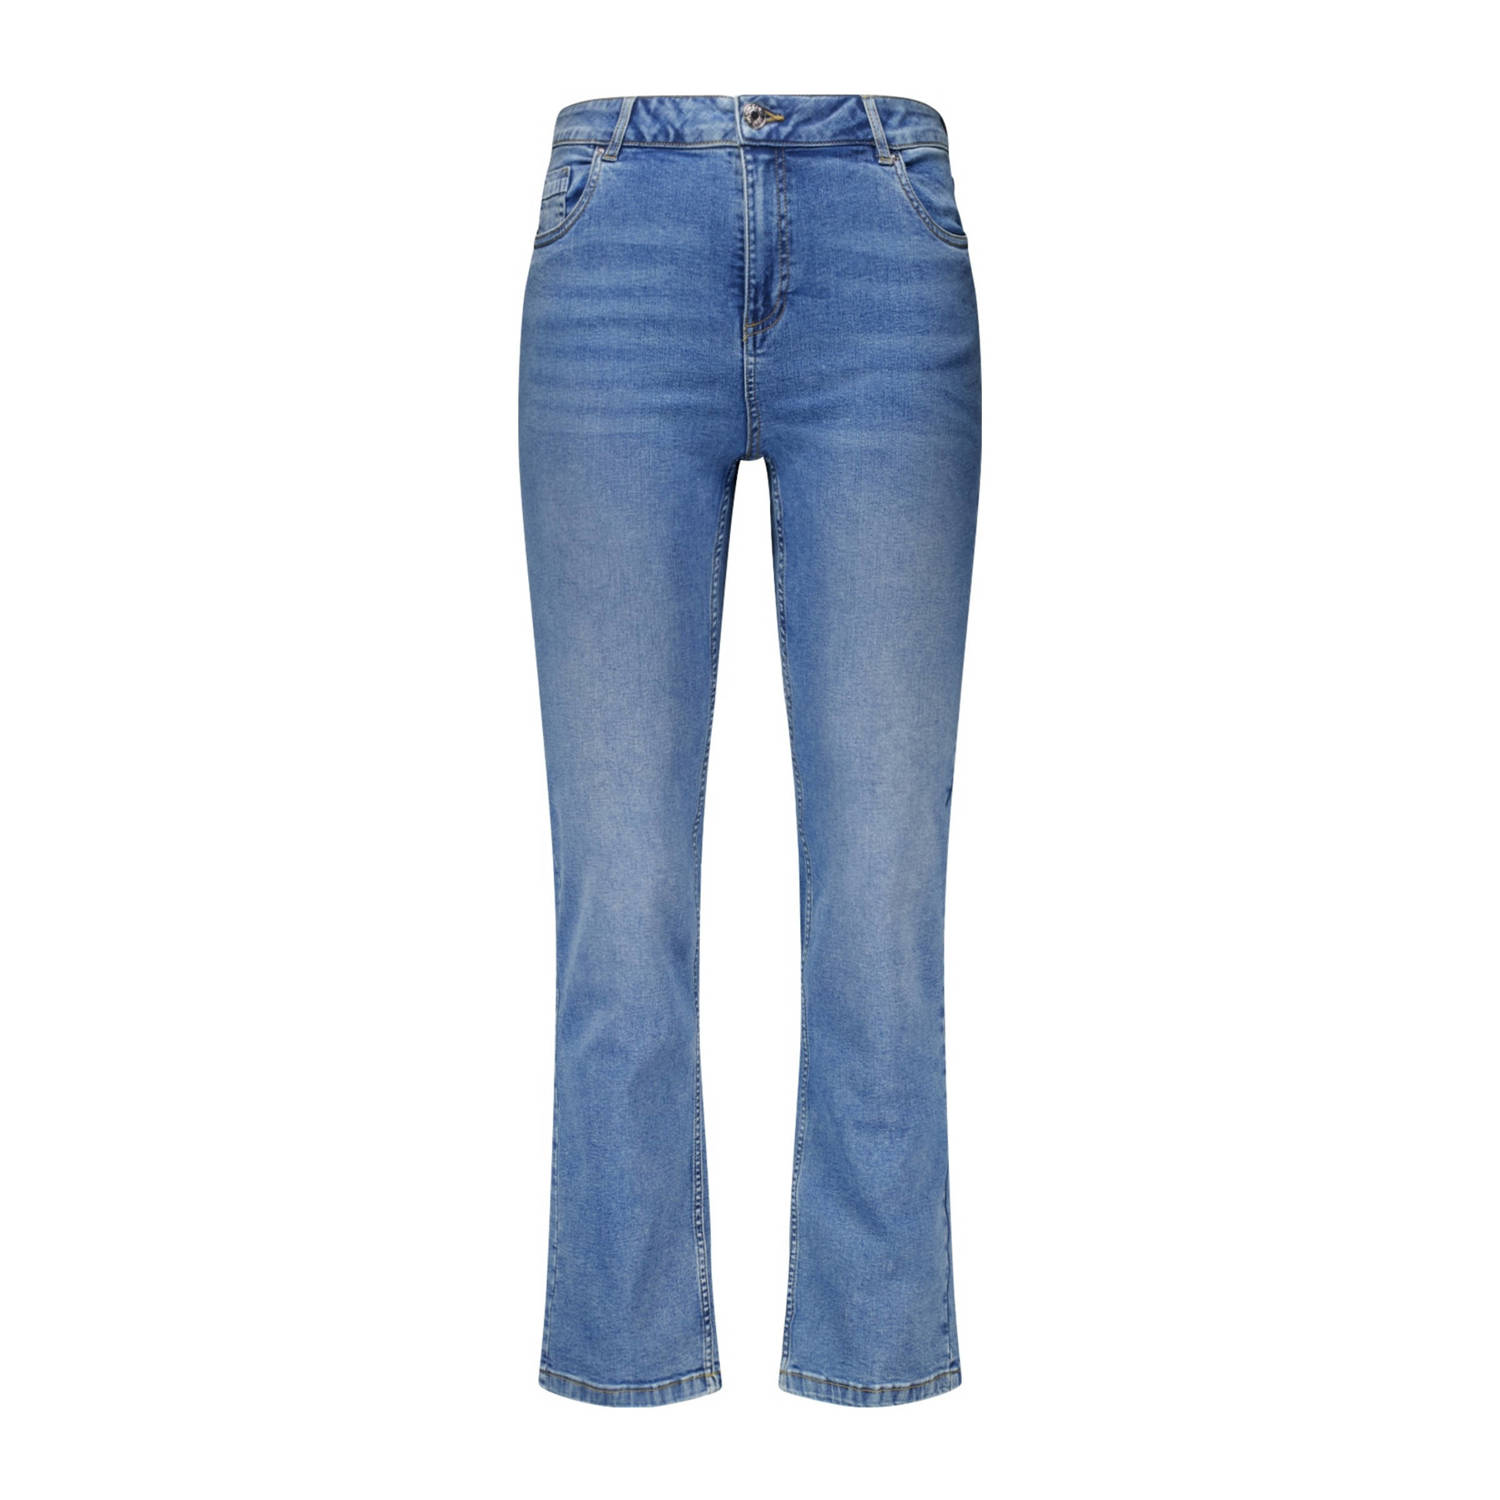 MS Mode straight jeans stonewashed light blue denim